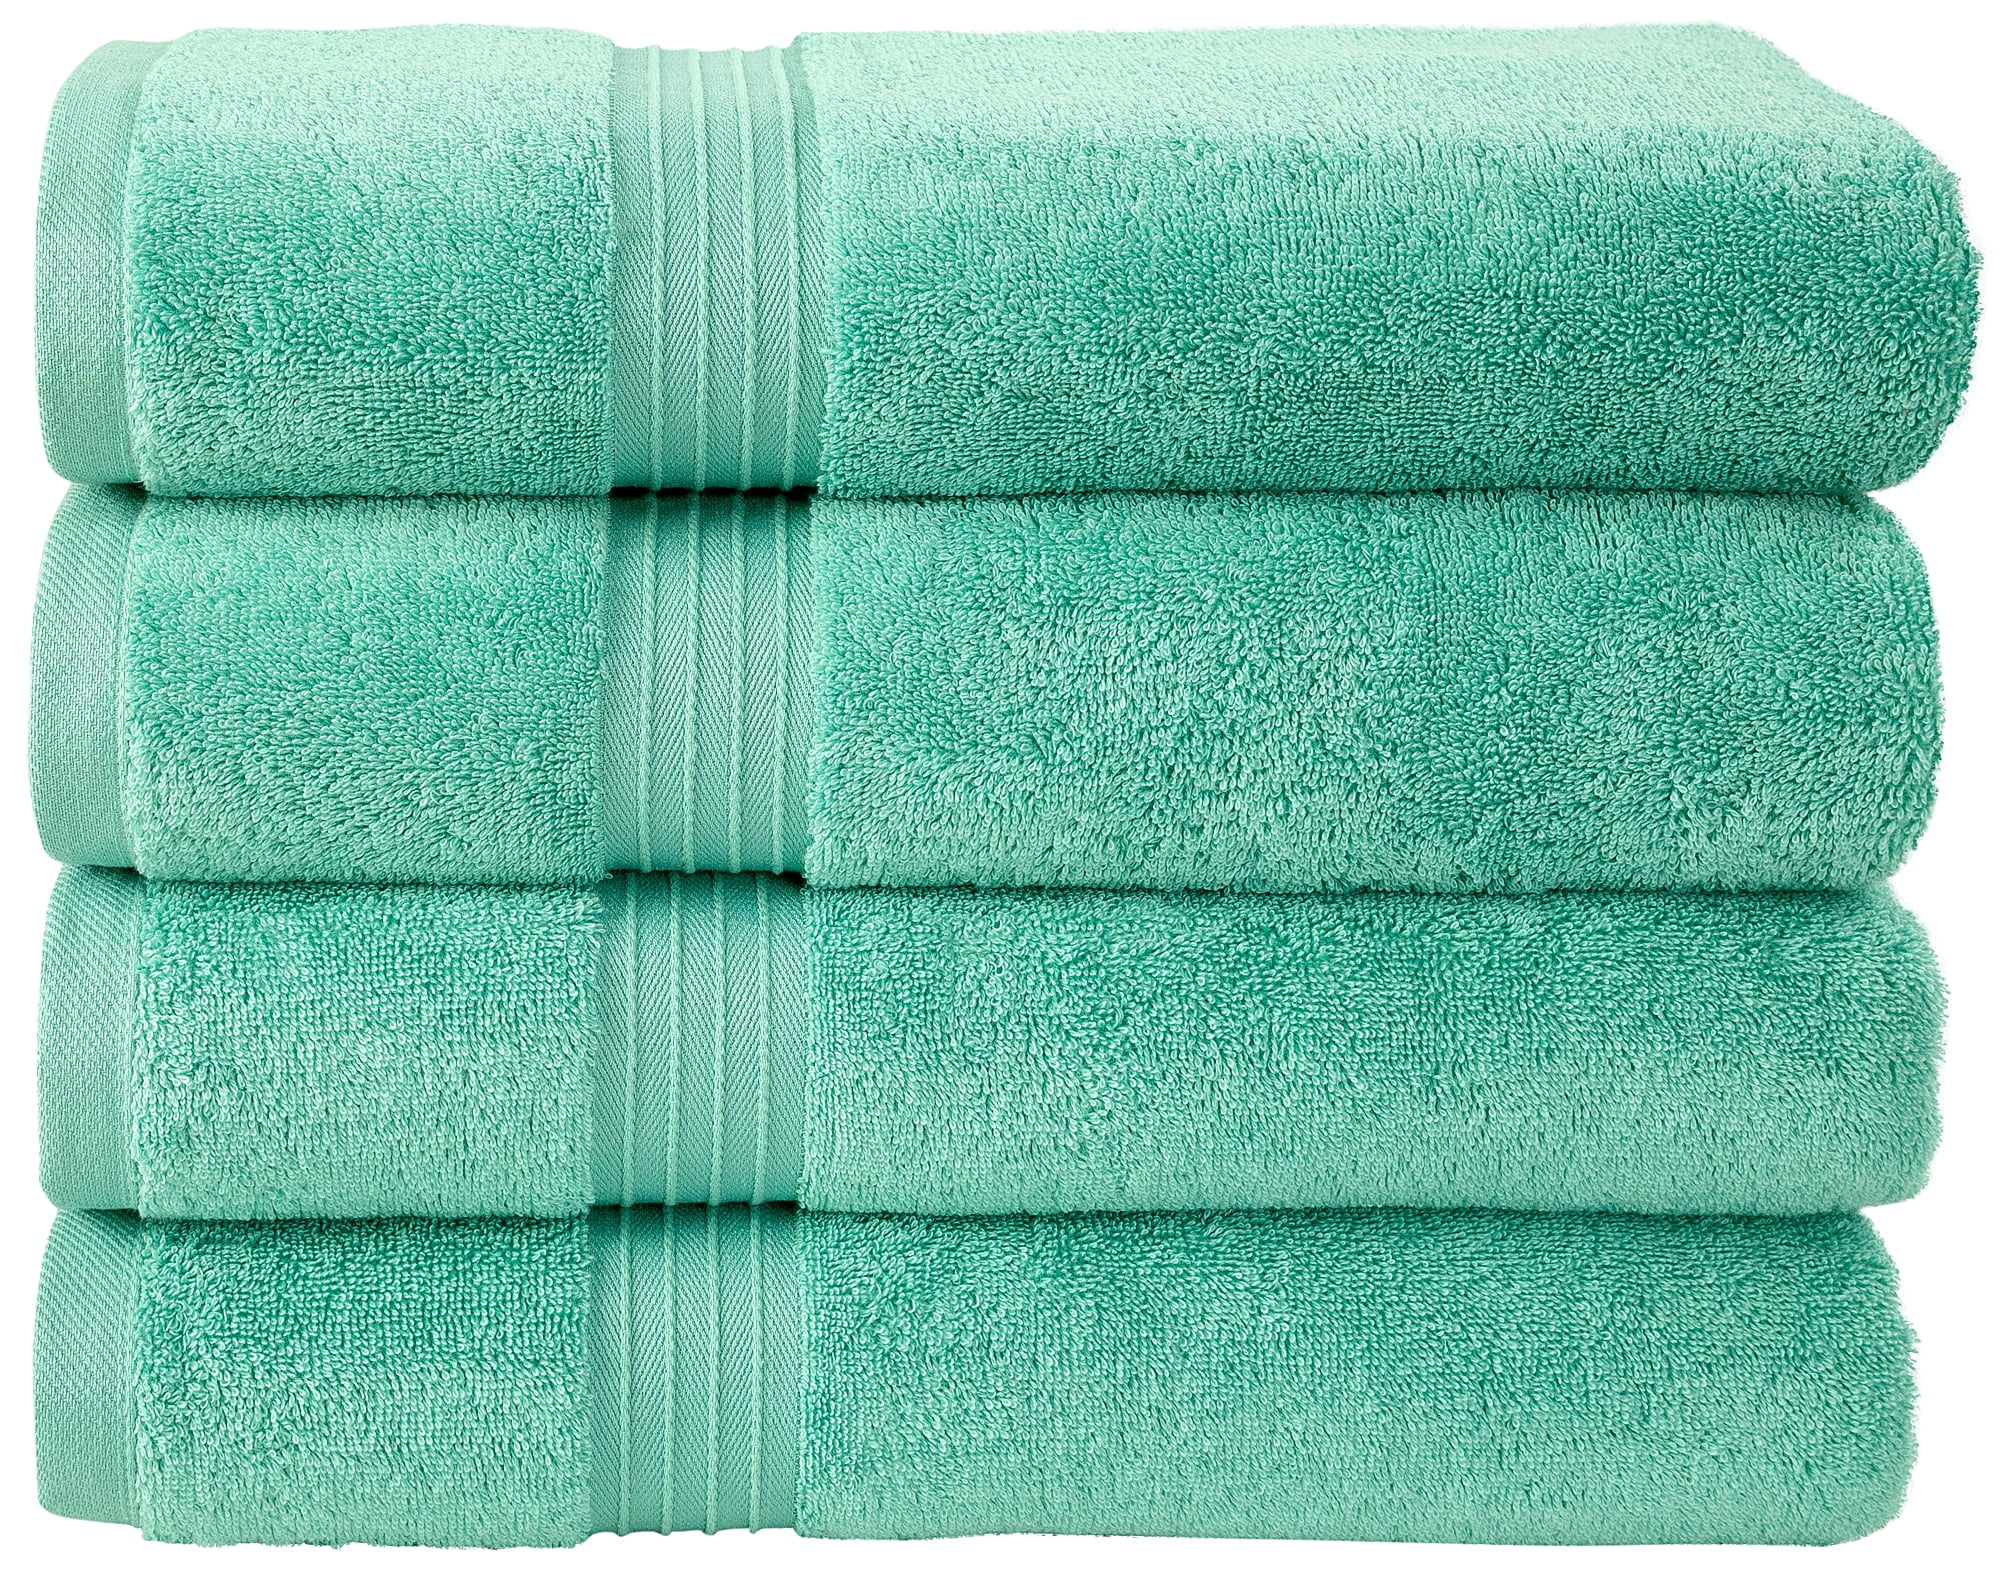 Details about   Extra Jumbo Bath Sheet Towel Bale Set 100% Pure Cotton Super Soft Thick 600 GSM 